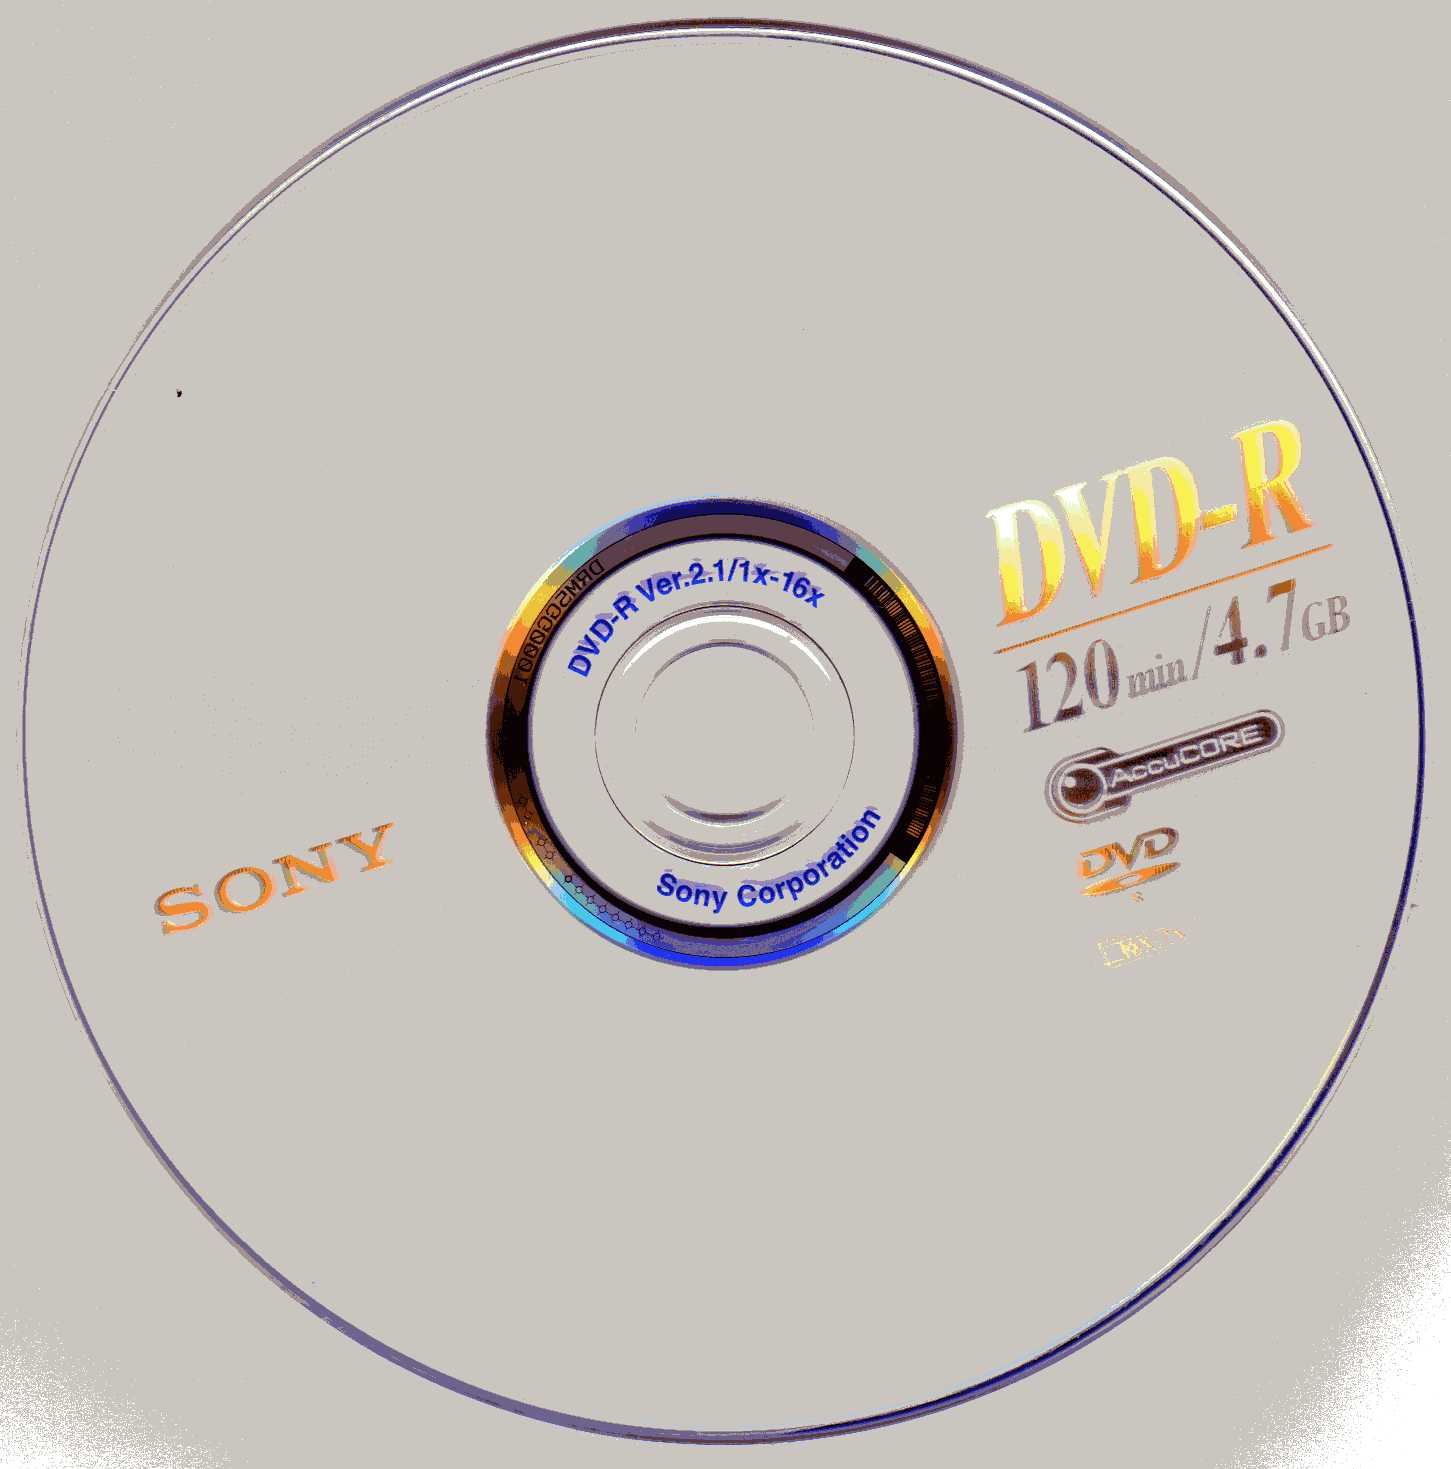 Sony NS955 DVD Player - Printer Friendly version